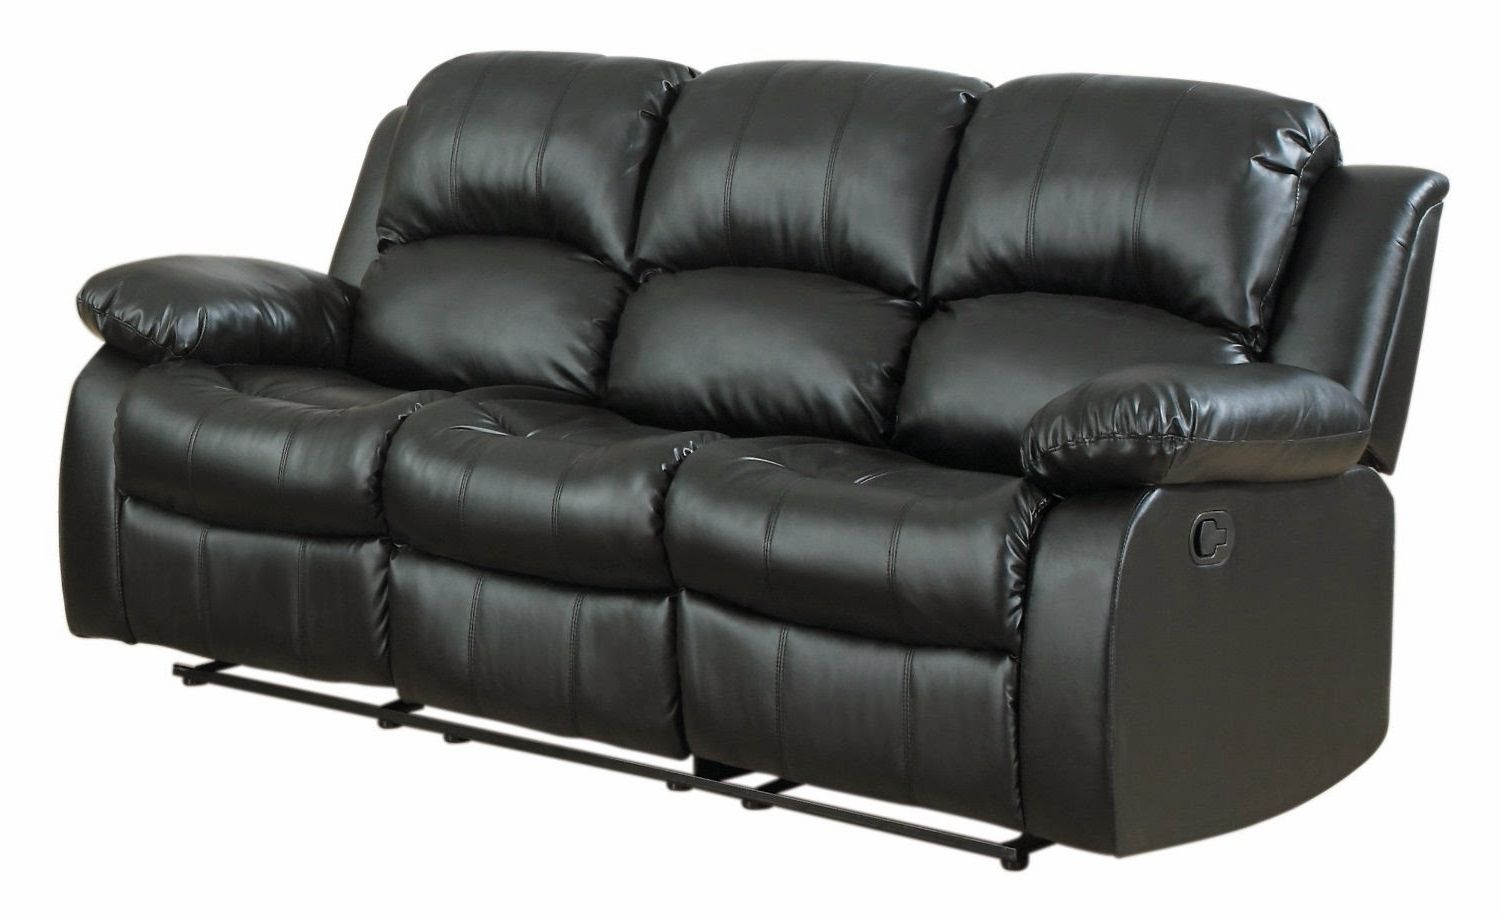 Berkline Sofas With Popular Reclining Sofas For Sale: Berkline Leather Reclining Sofa Costco (View 5 of 15)